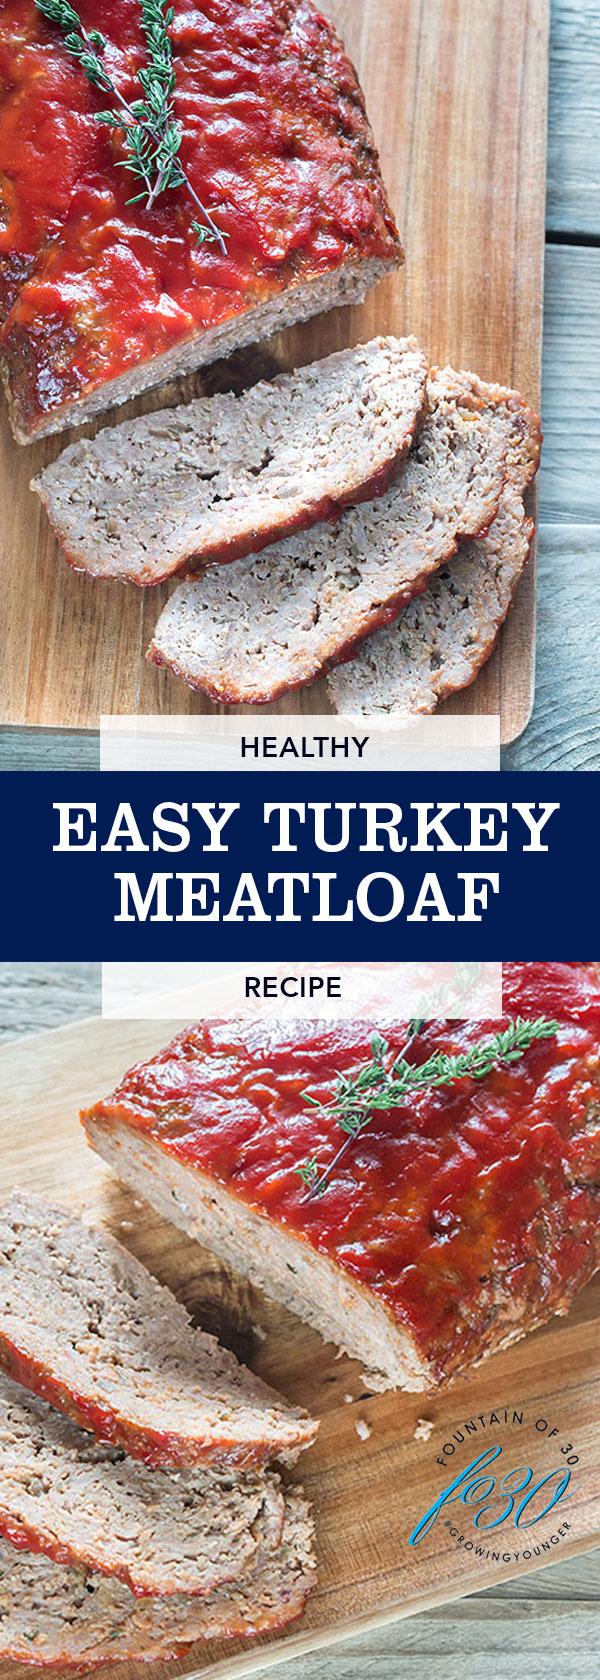 easy meatloaf recipe fountainof30